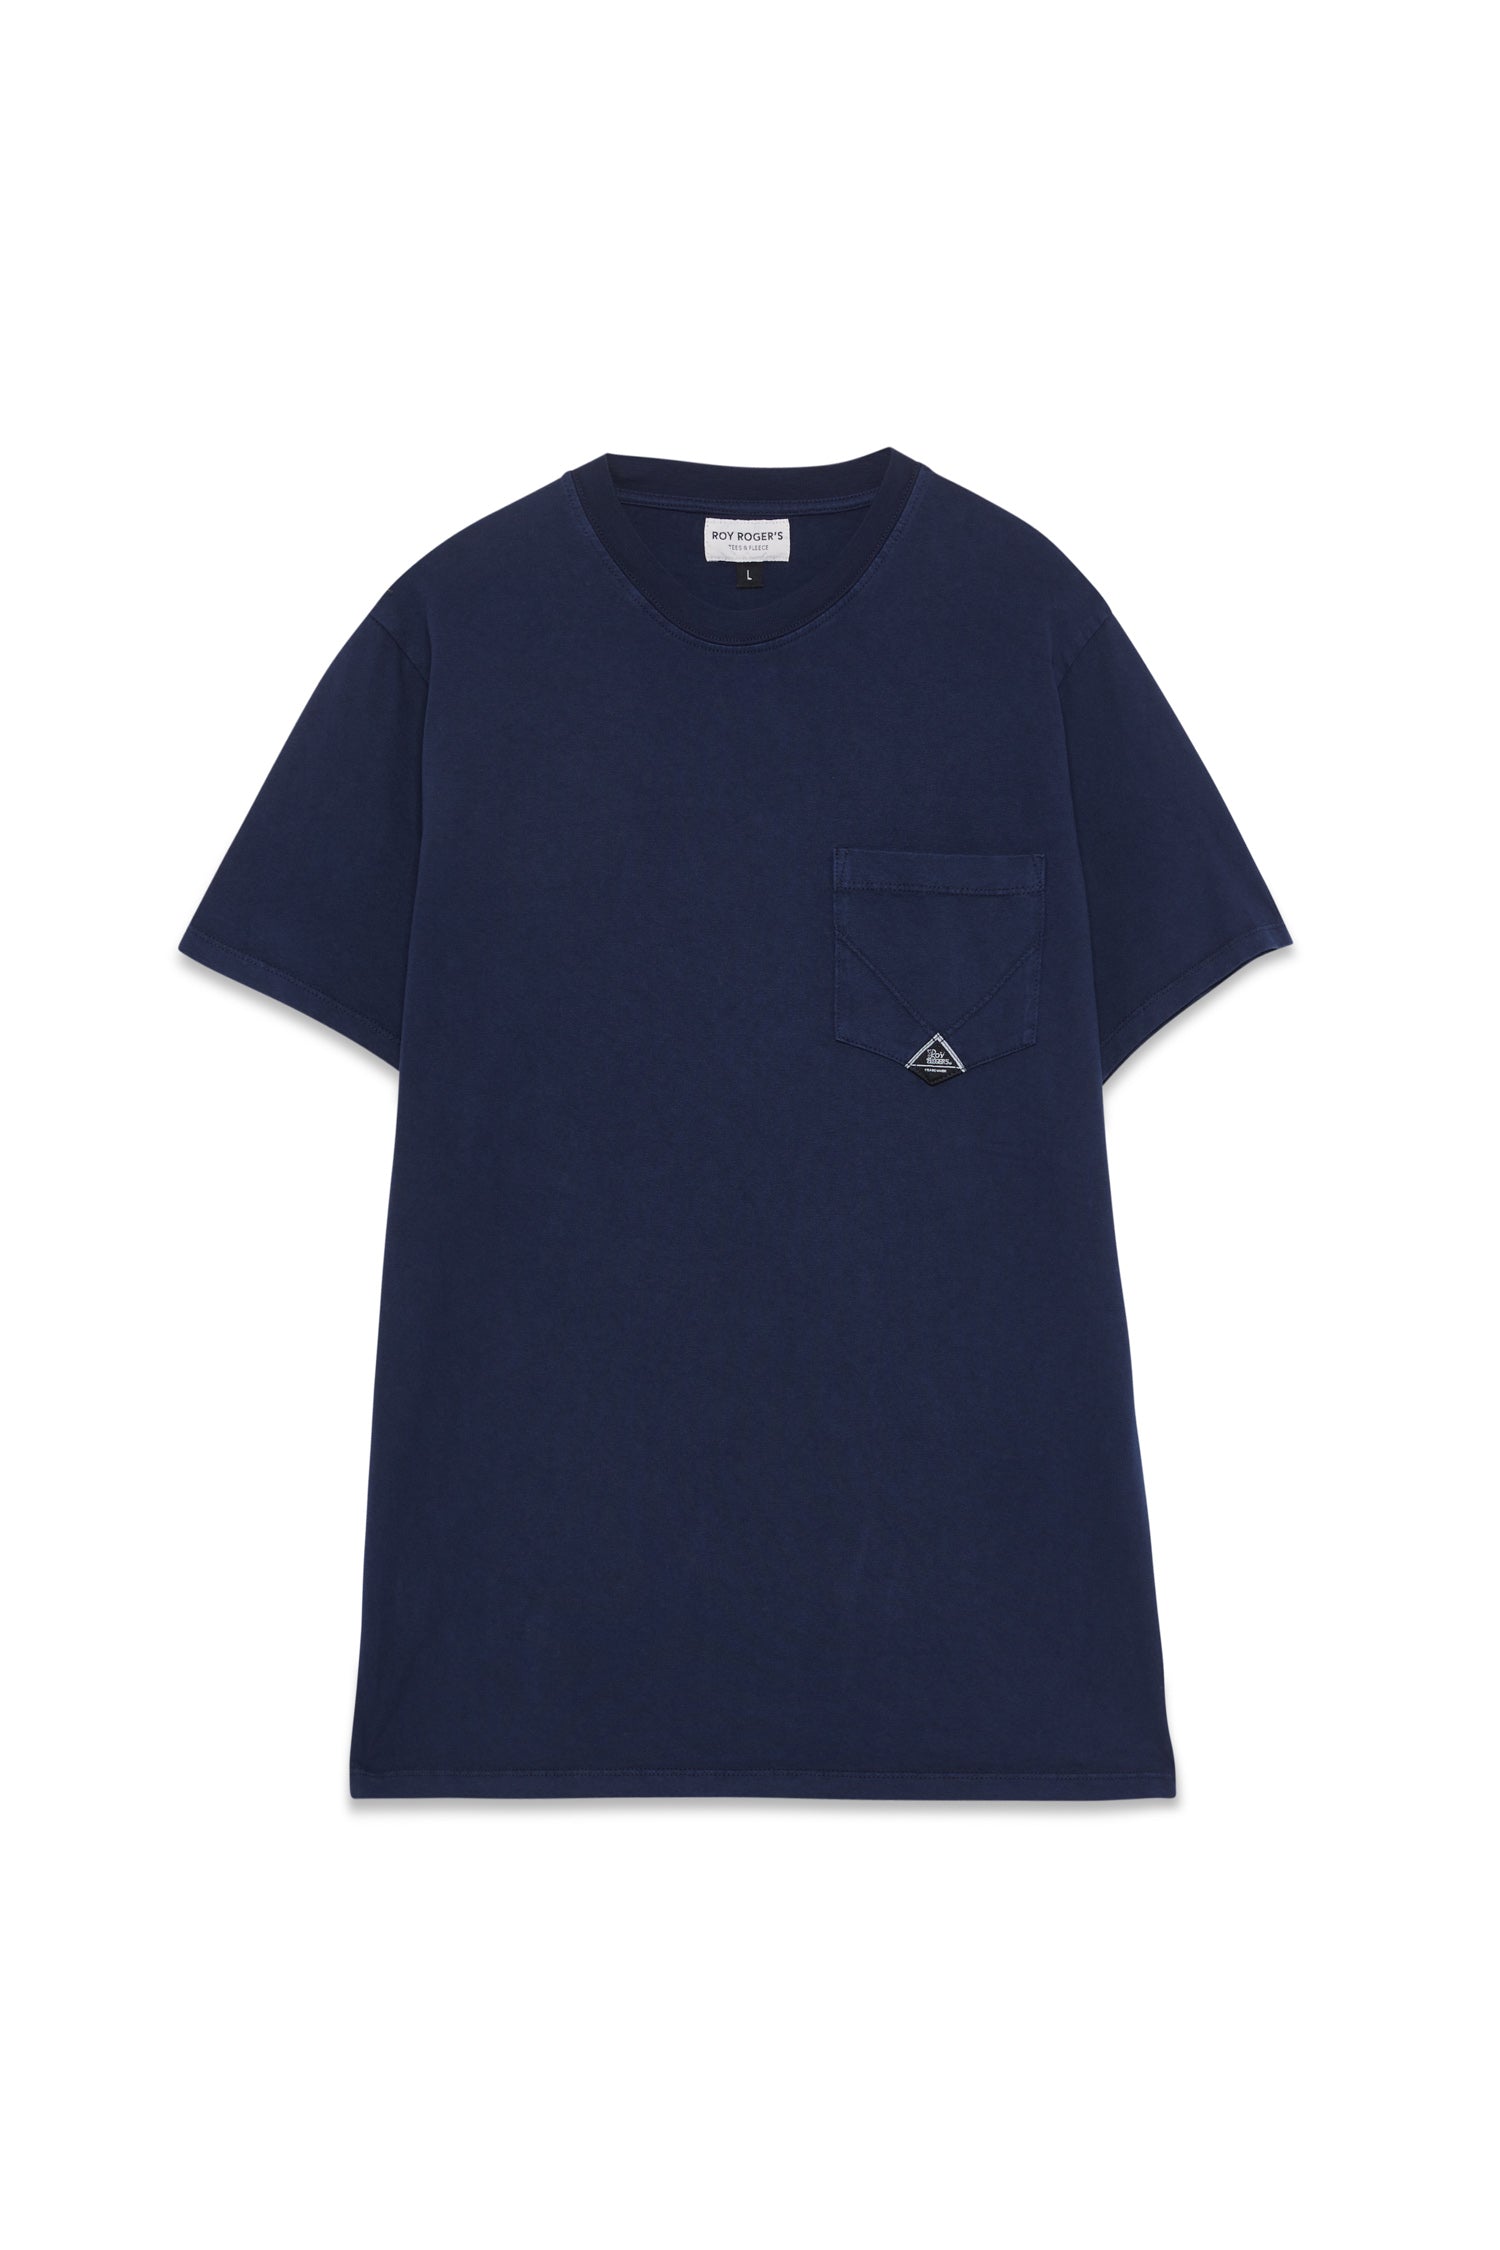 T-shirt ROY ROGER'S Mezza manica taschino
Blu